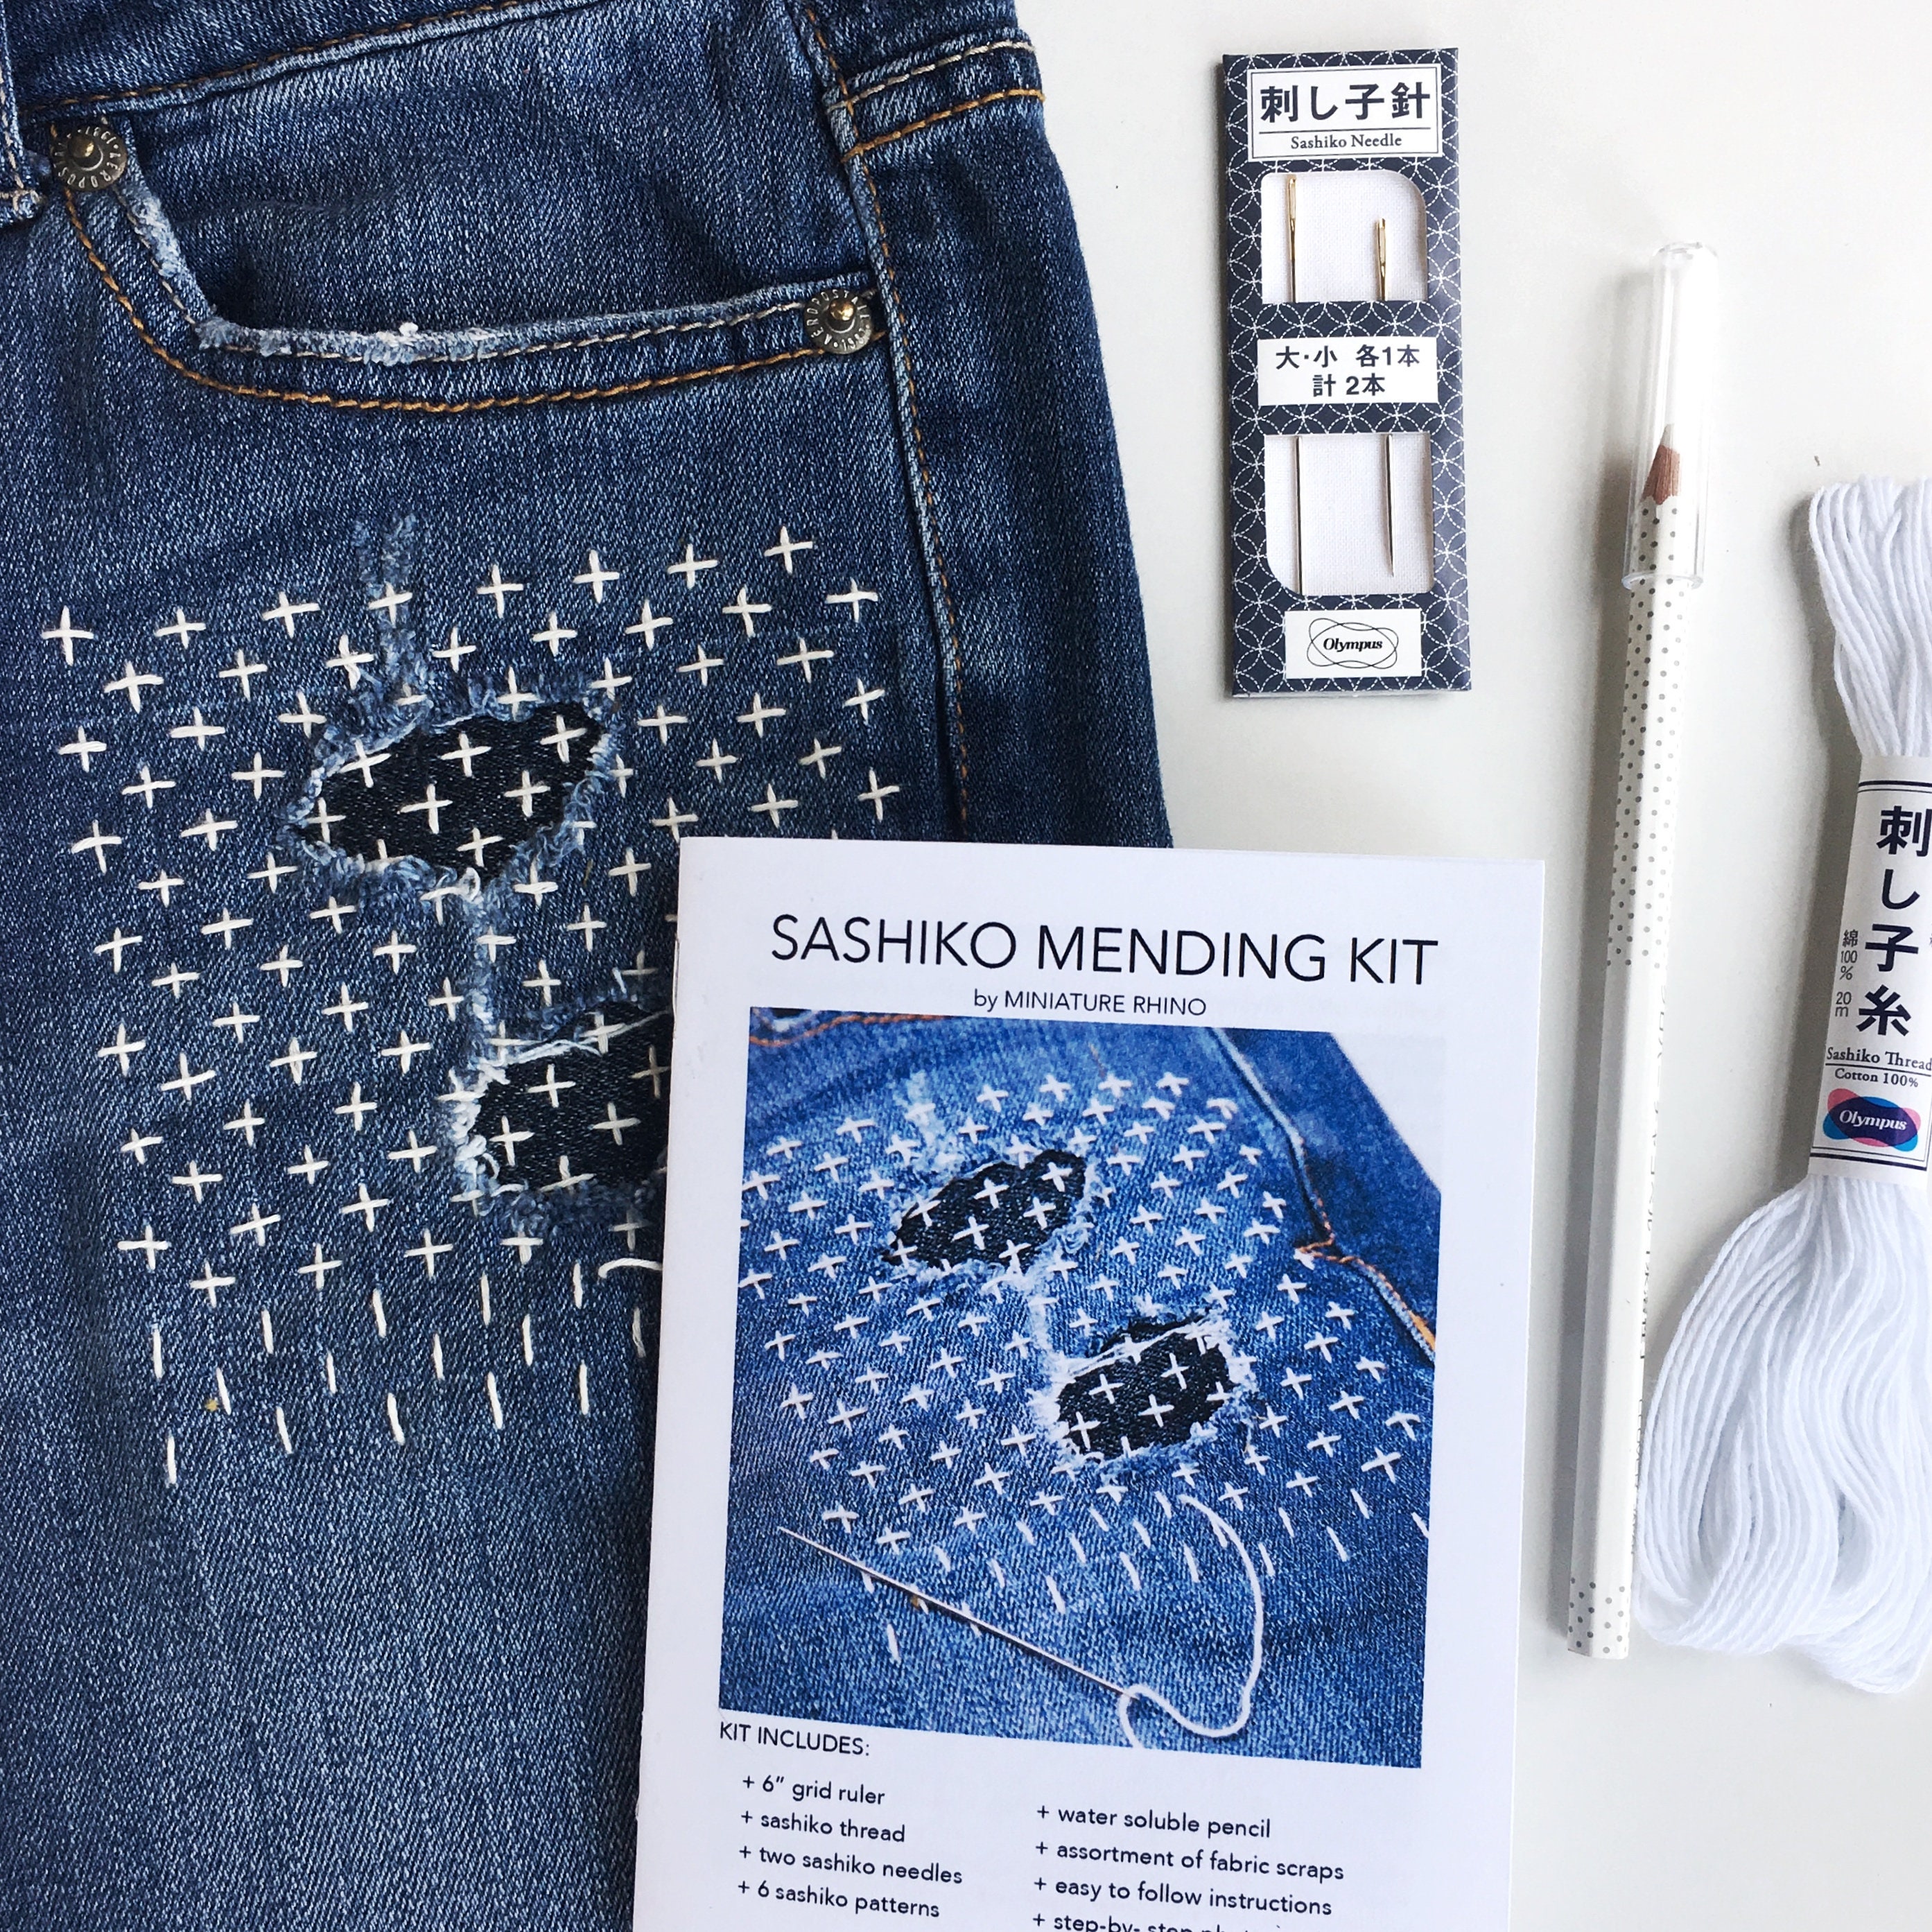 Mending Kit with 52 Sashiko Patterns - A Threaded Needle